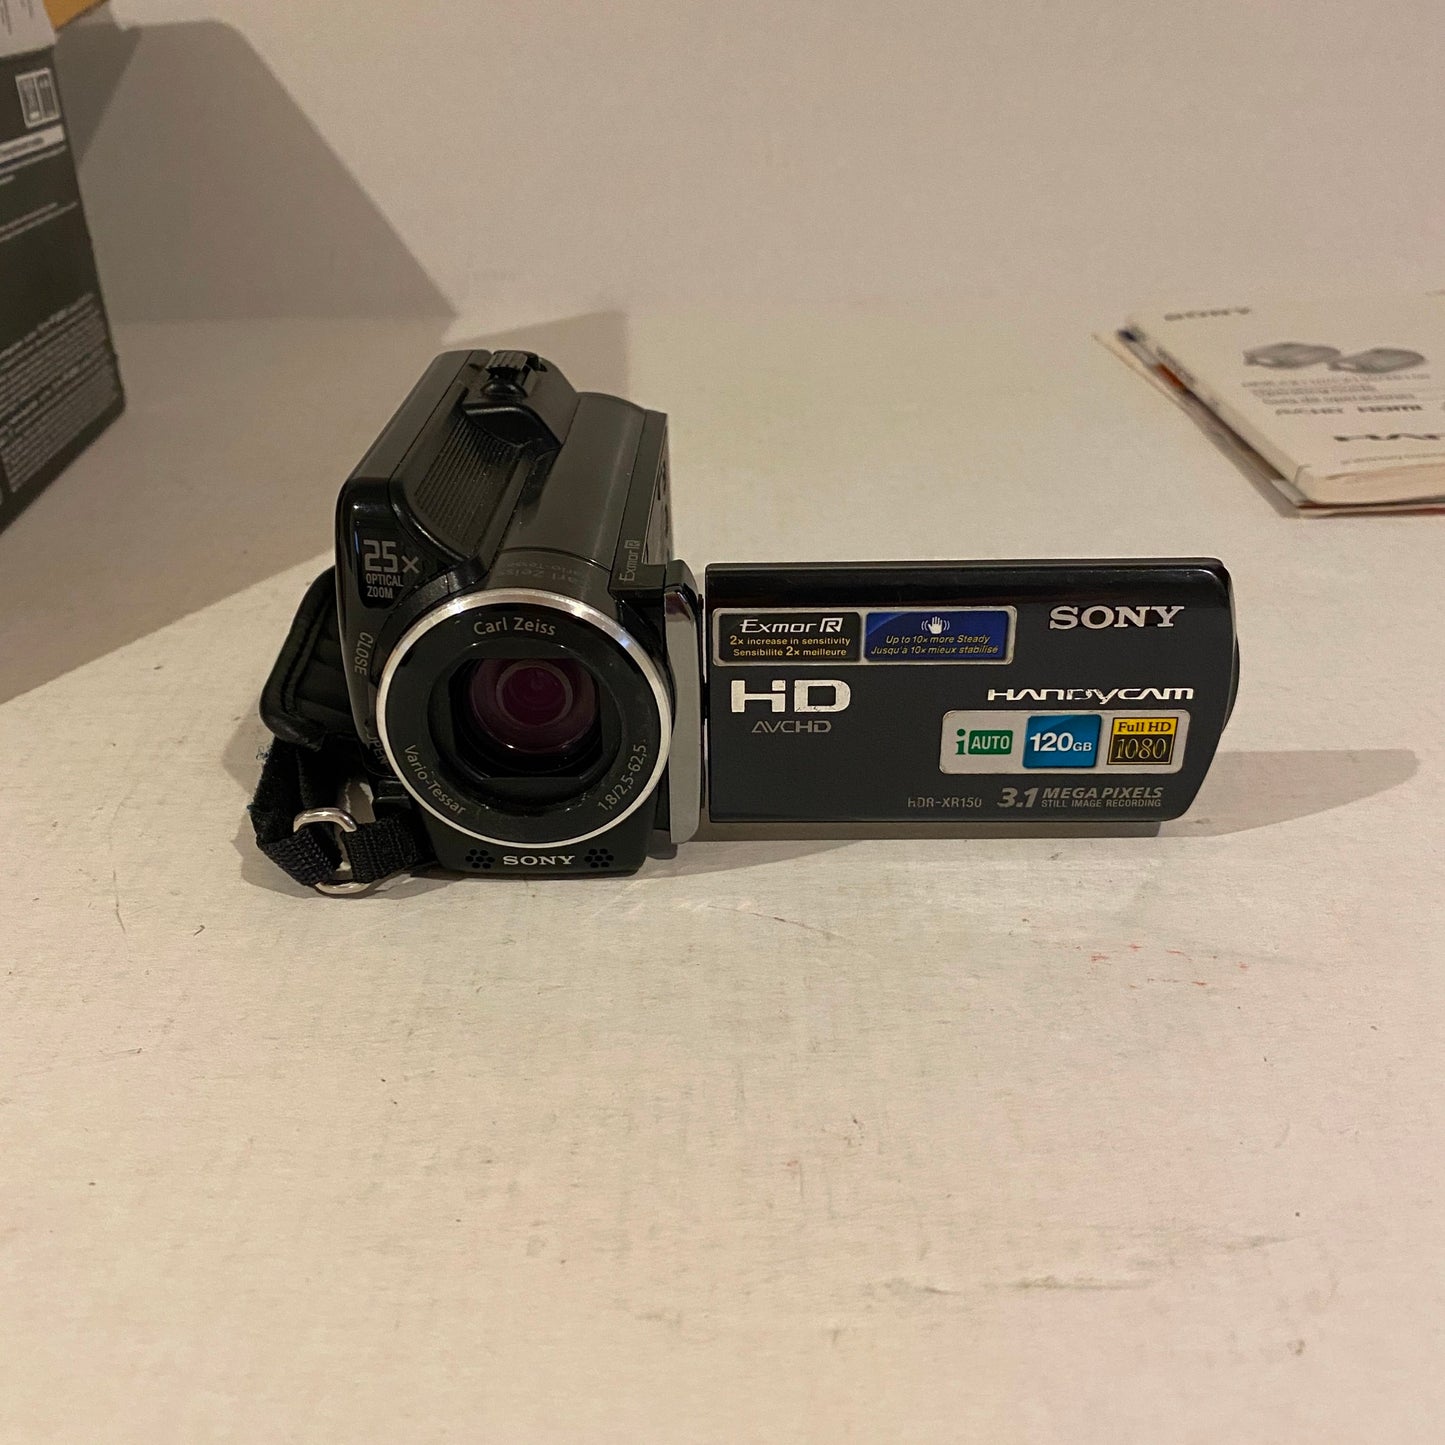 Sony Handycam 120 GB HDD Full HD - HDR-XR150 - Missing A/V door clip